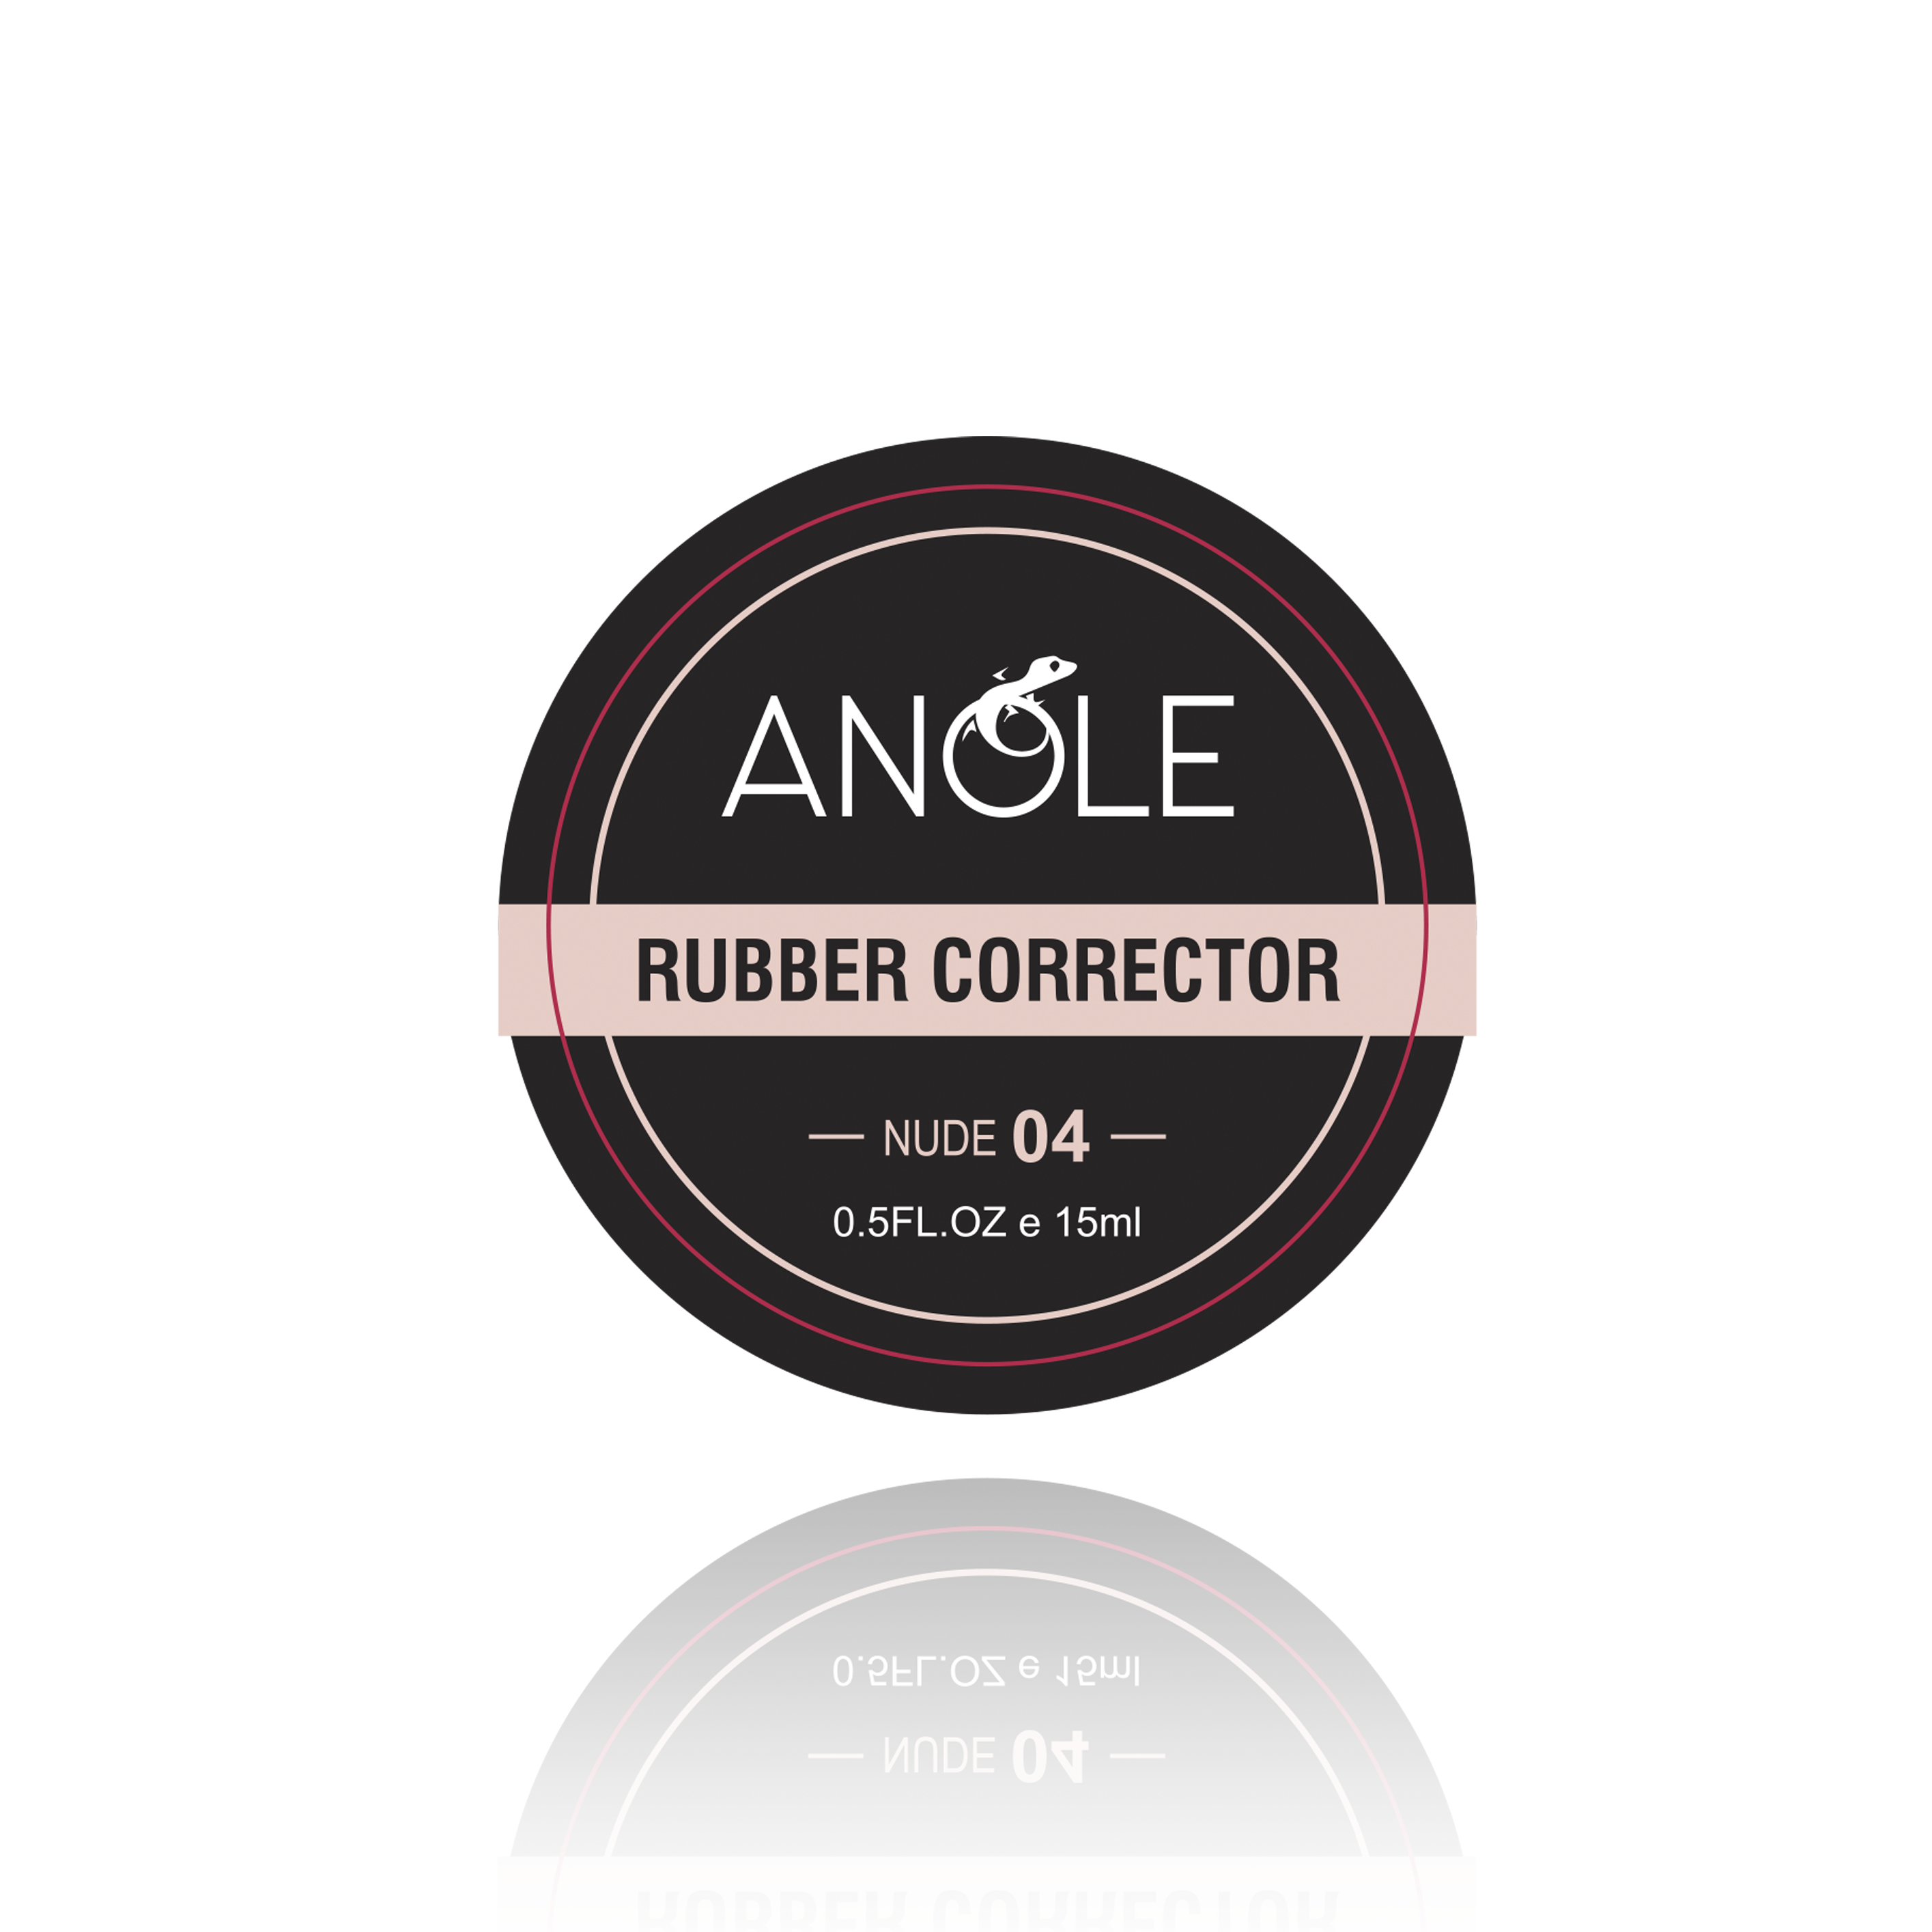 anole rubber corrector nude 4